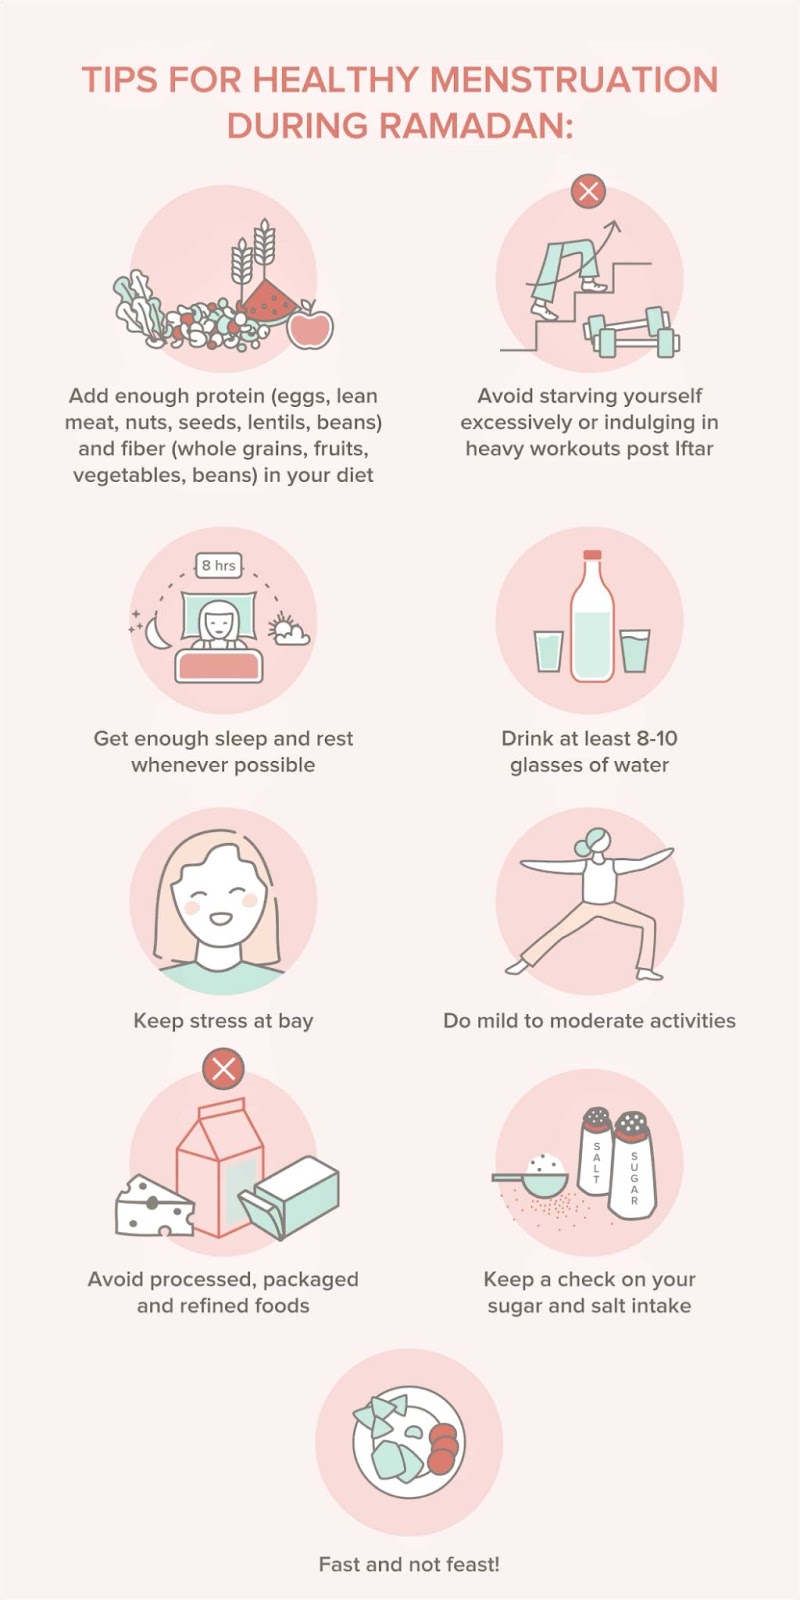 Tips for healthy menstruation during Ramadan